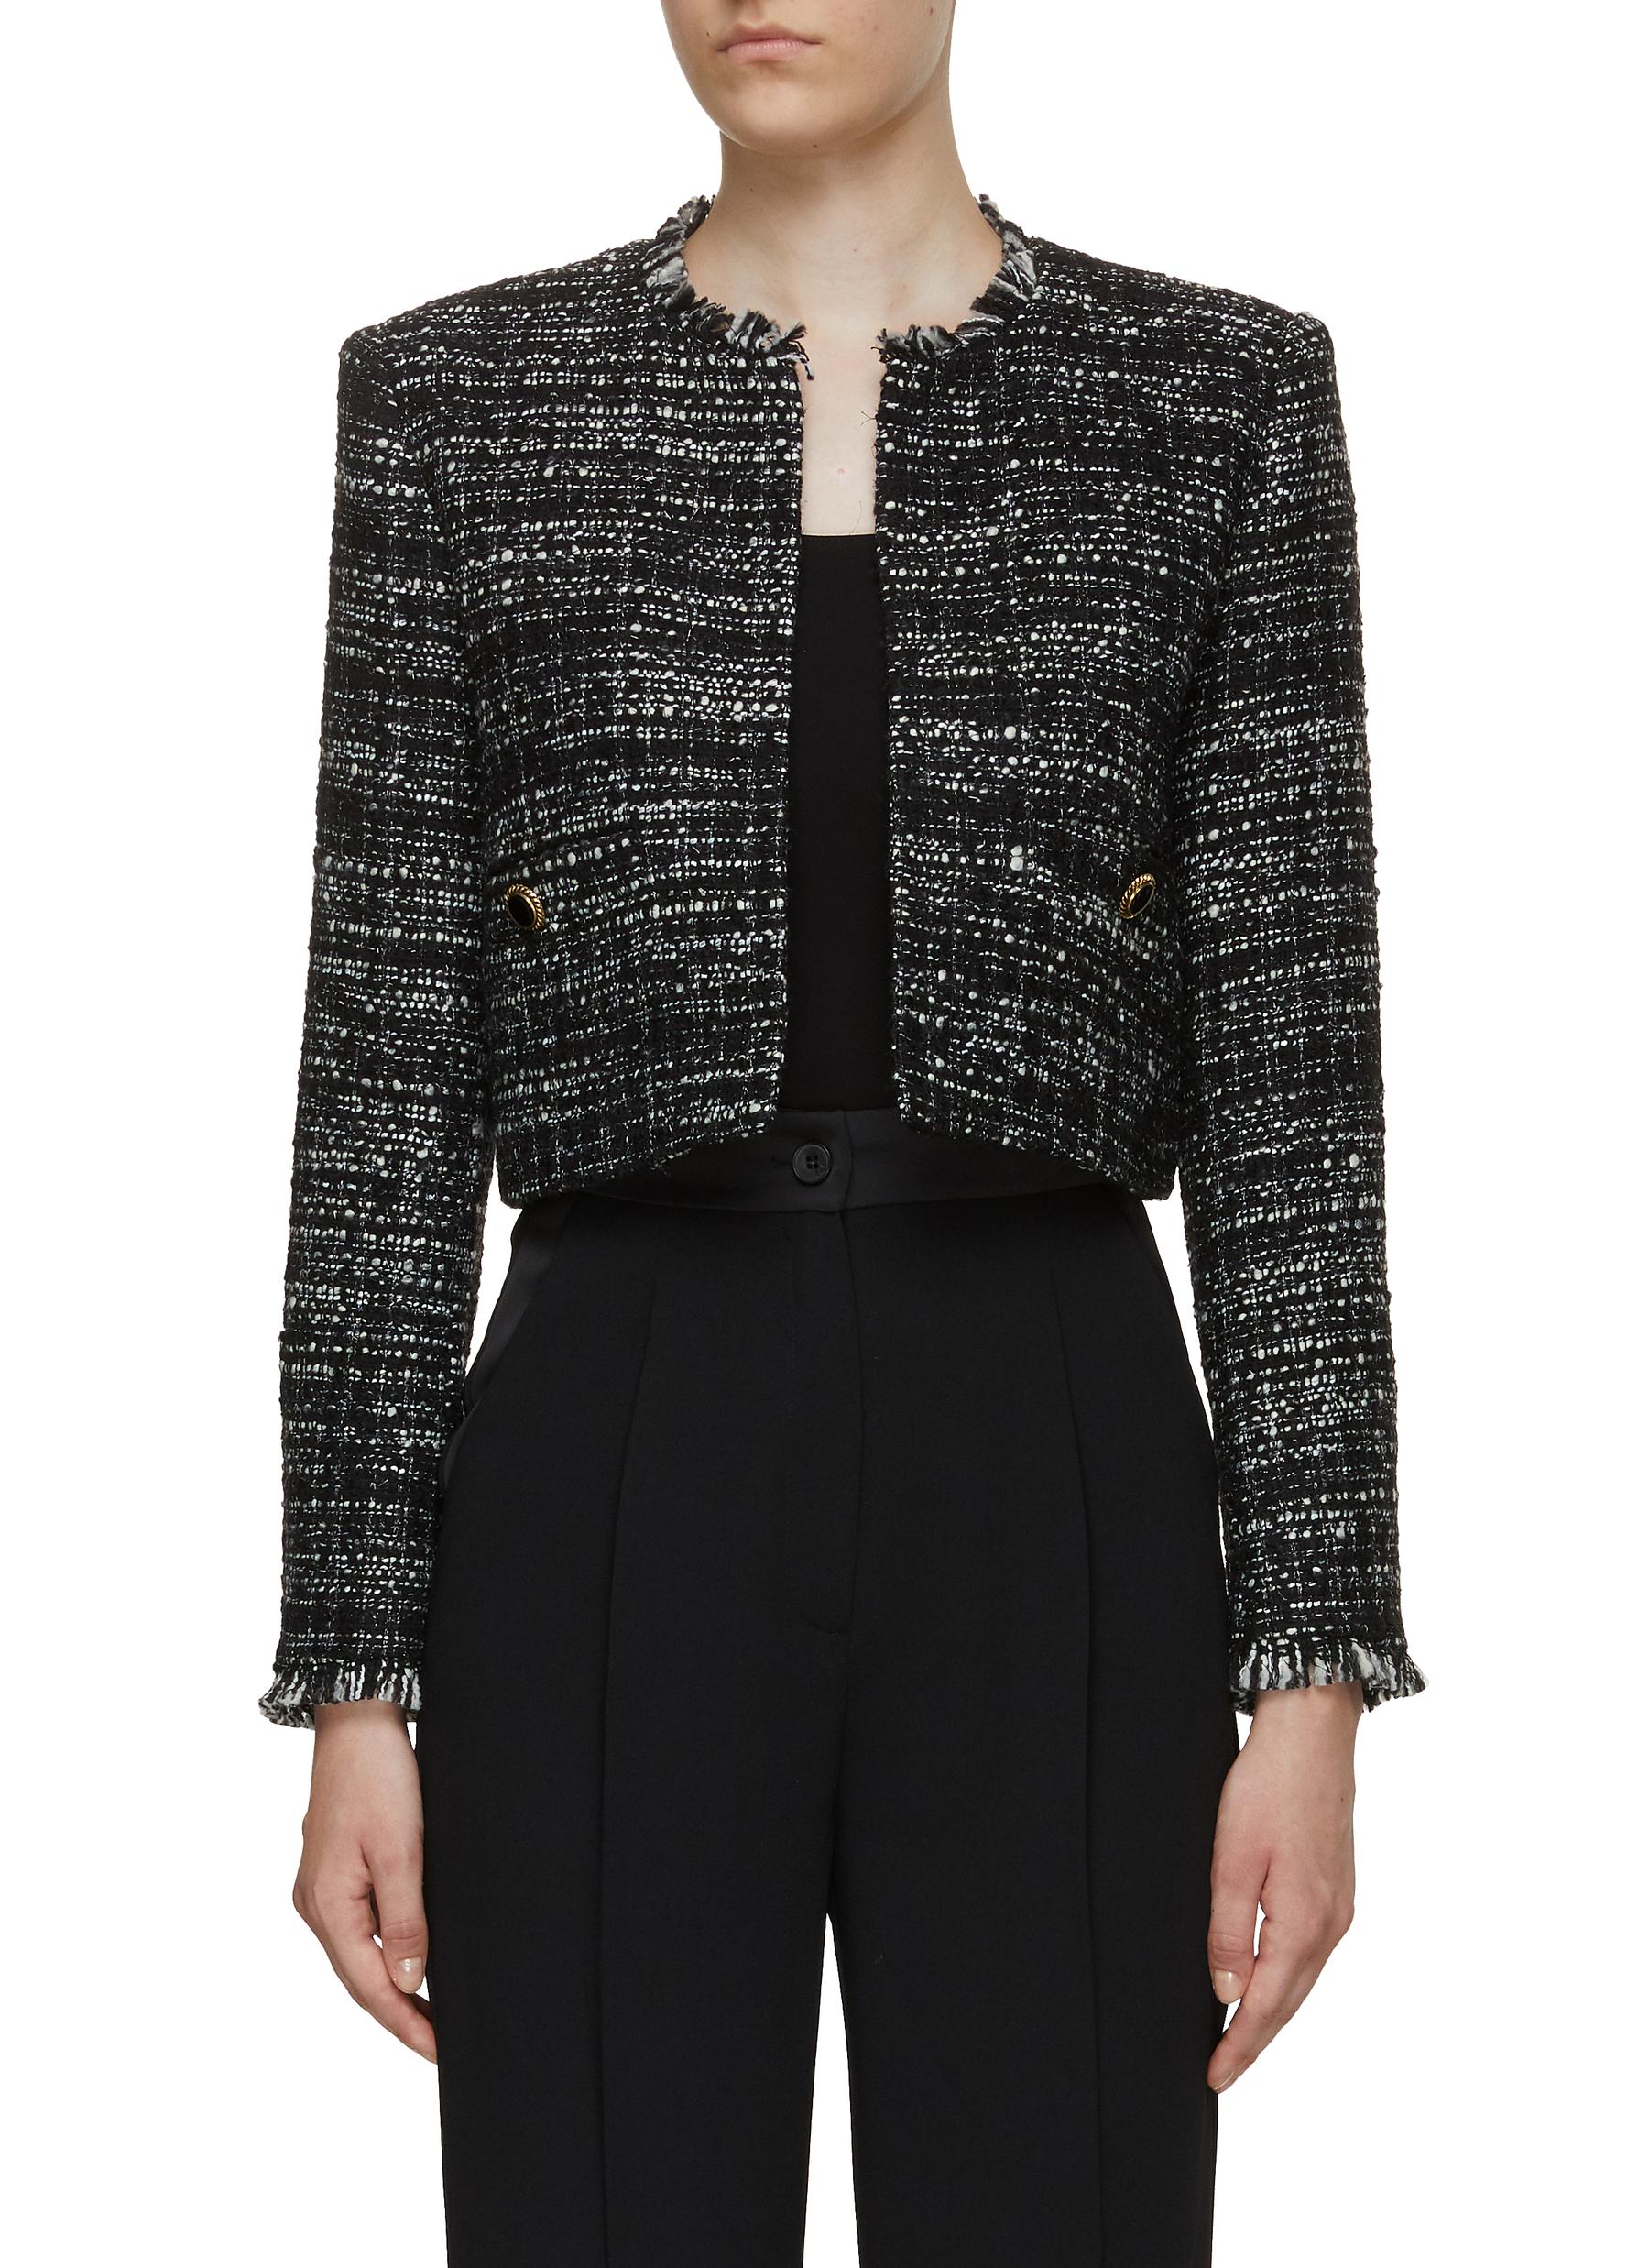 MARELLA, Cropped Tweed Jacket, Women